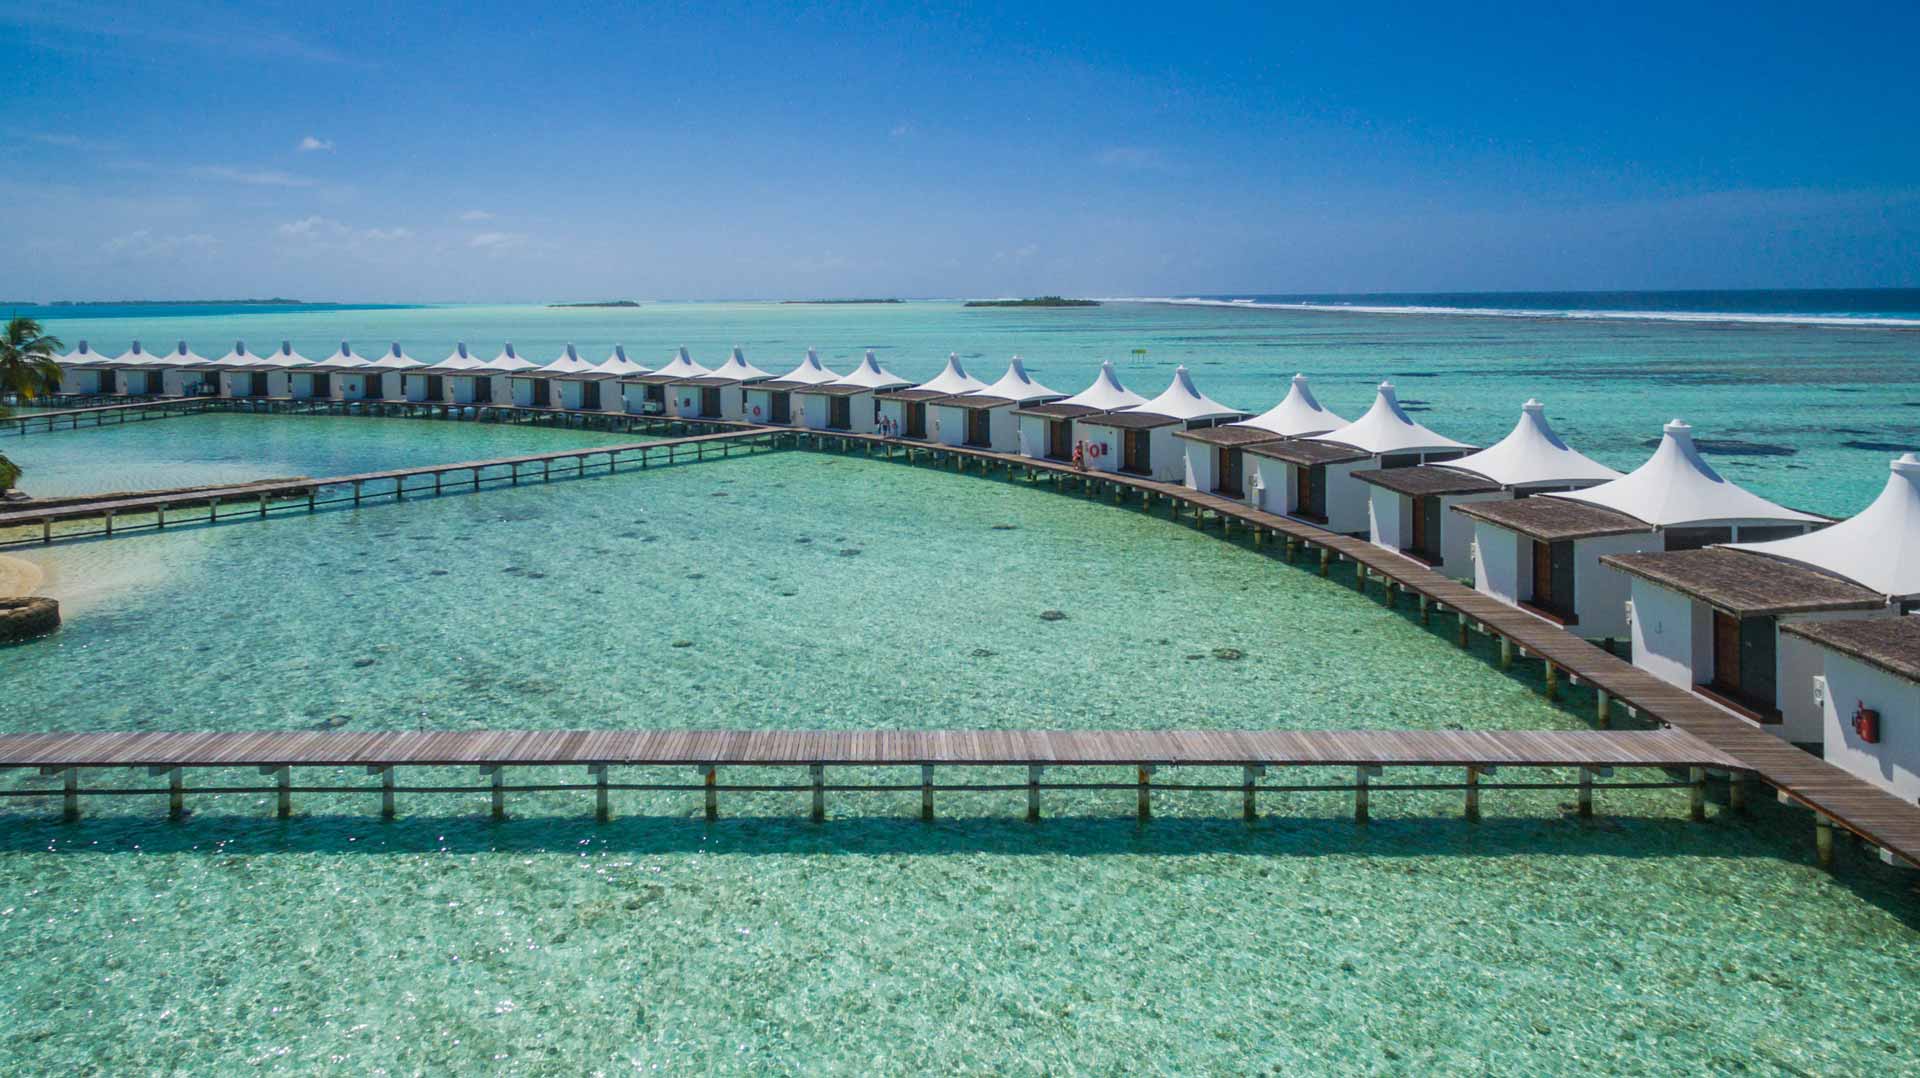 Maldives Trip Cost Accommodations Own private island in the Maldives